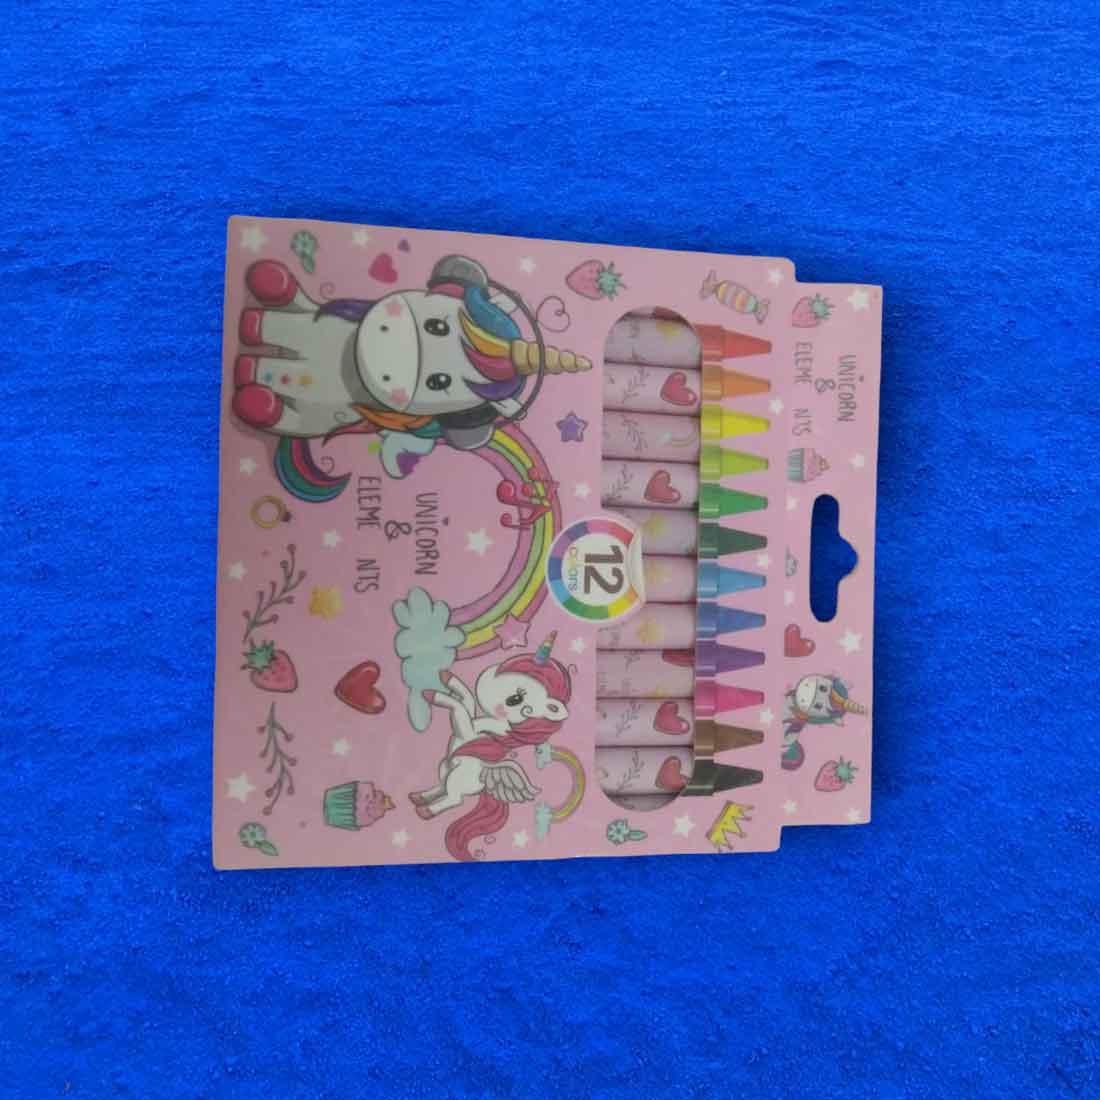 Crayons Set - for Kids | Birthday Return Gift for Kids (Unicorn) - Multicolor (Pack of 12) - Apkamart